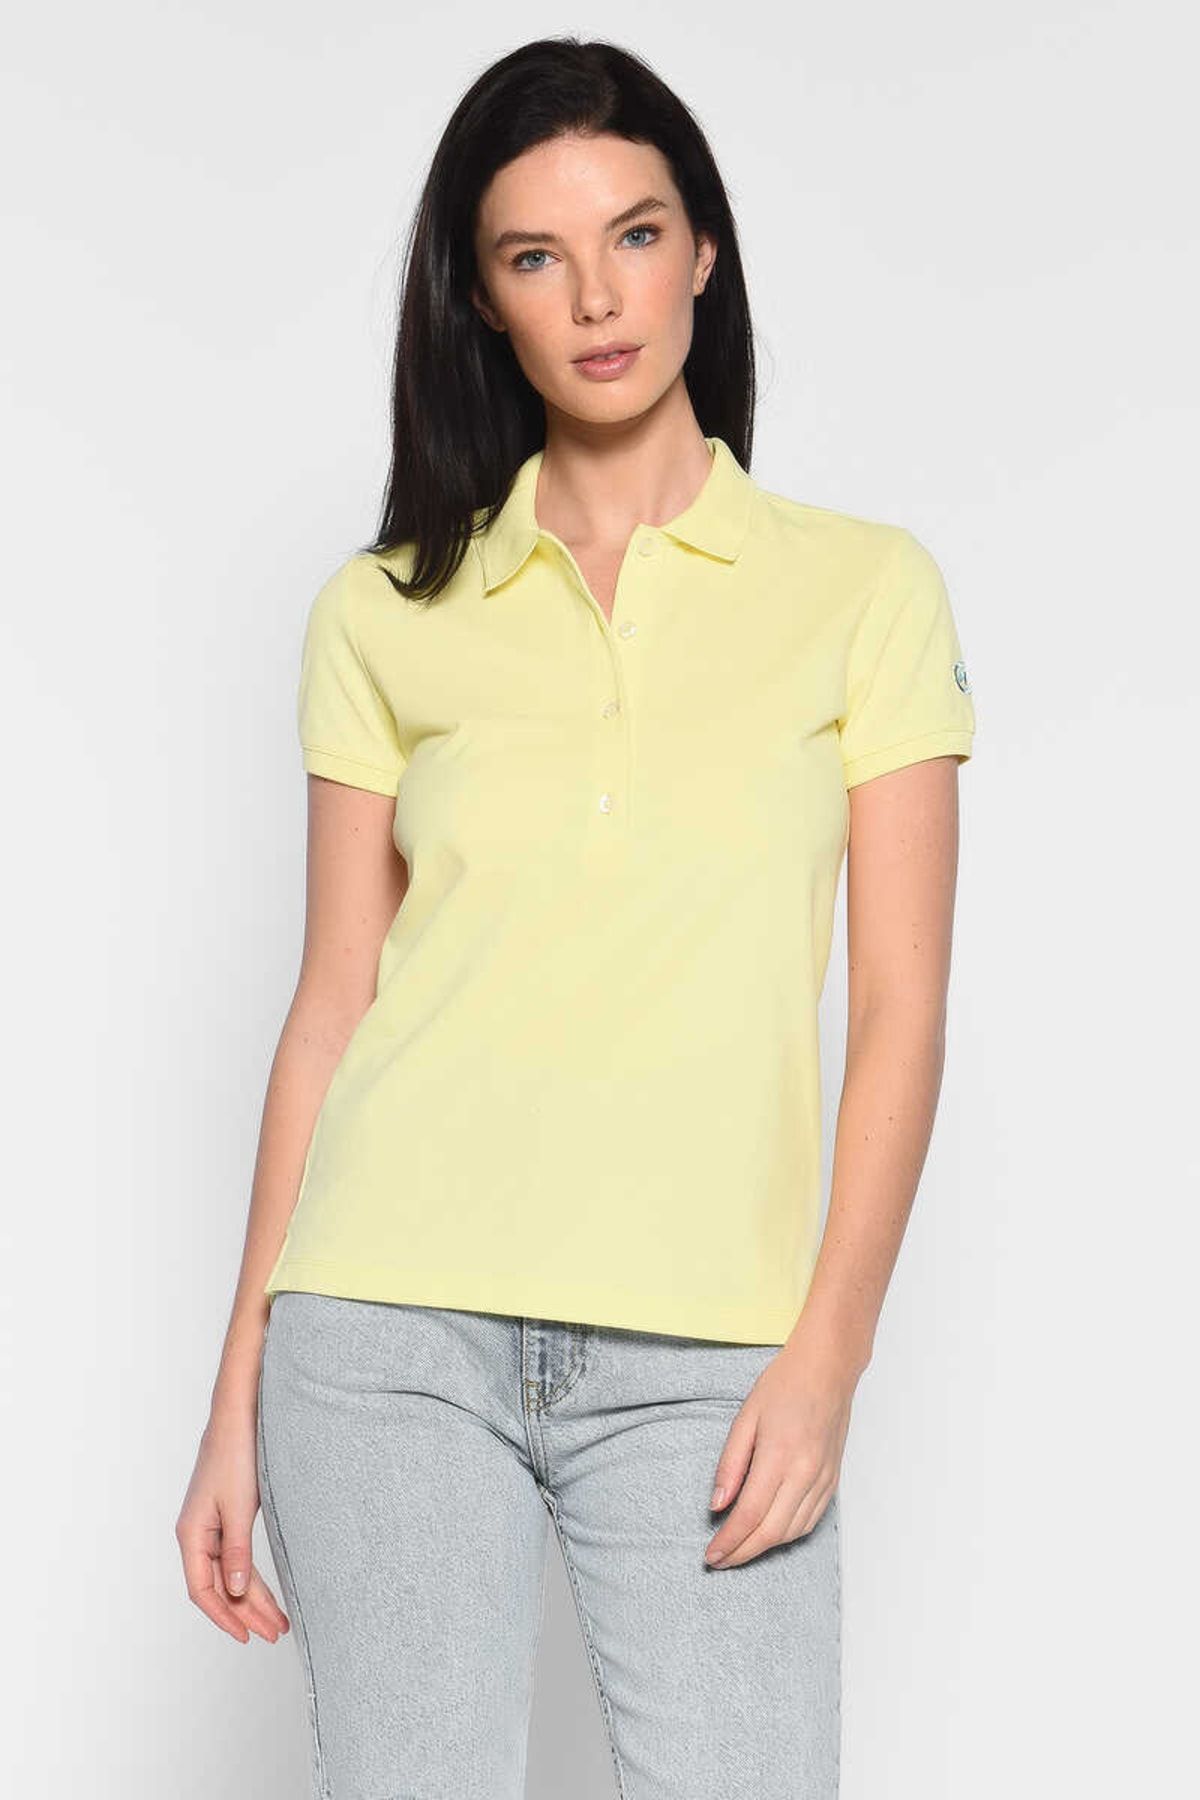 Ecko Unltd Amanda Sarı Kadın Polo Yaka Tshirt